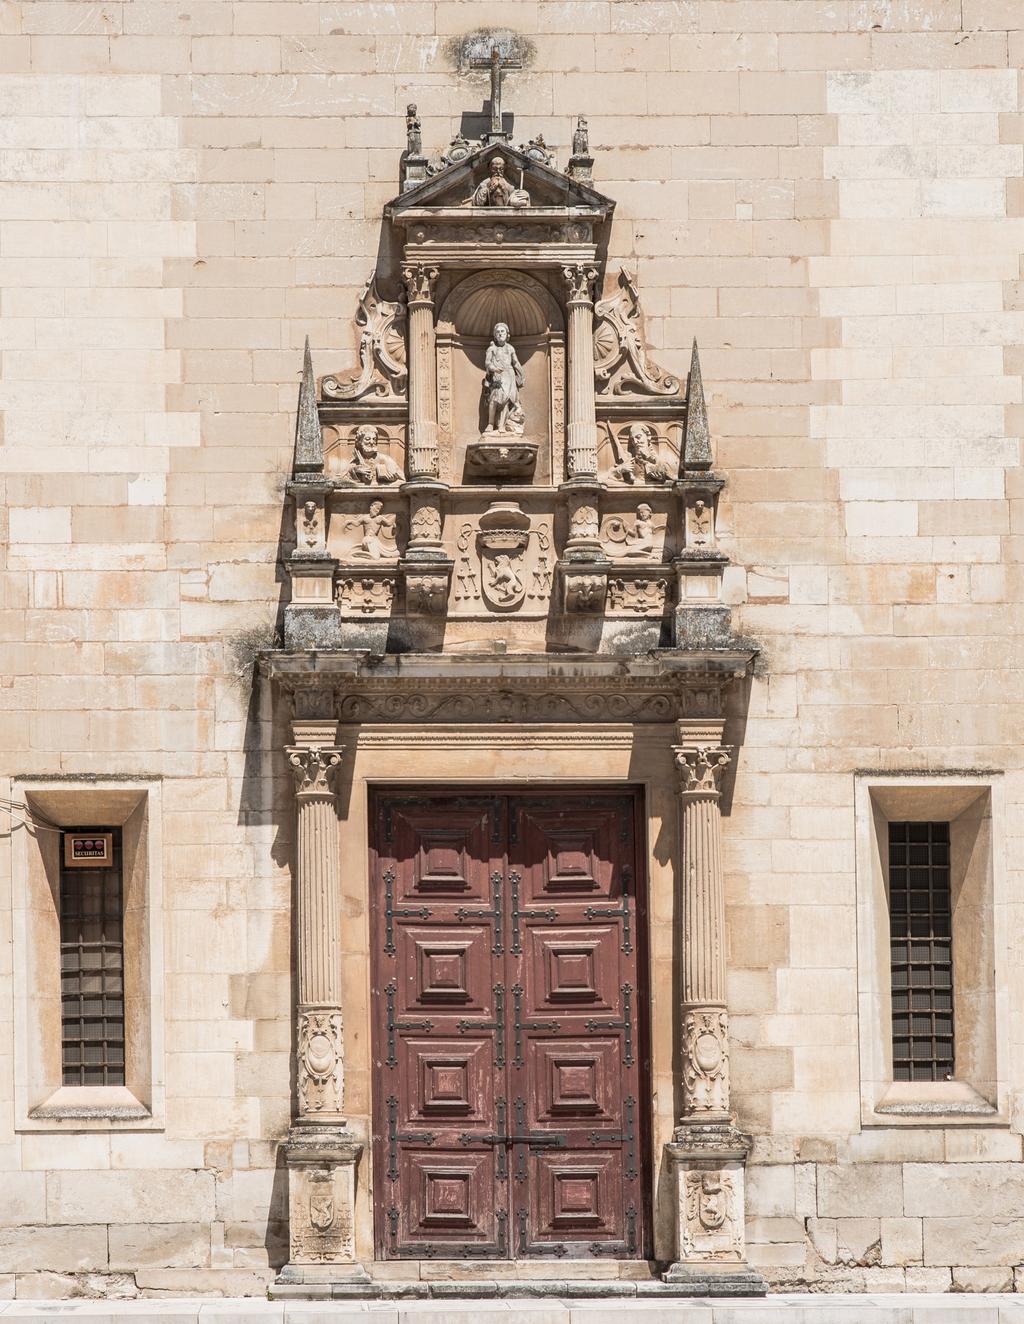 MNMC, Prov. Convento de Santa Ana, Coimbra Portal de Santa Ana 1610, Igreja de S. João de Almedina O portal que remata a fachada sul (e principal) da igreja de S.